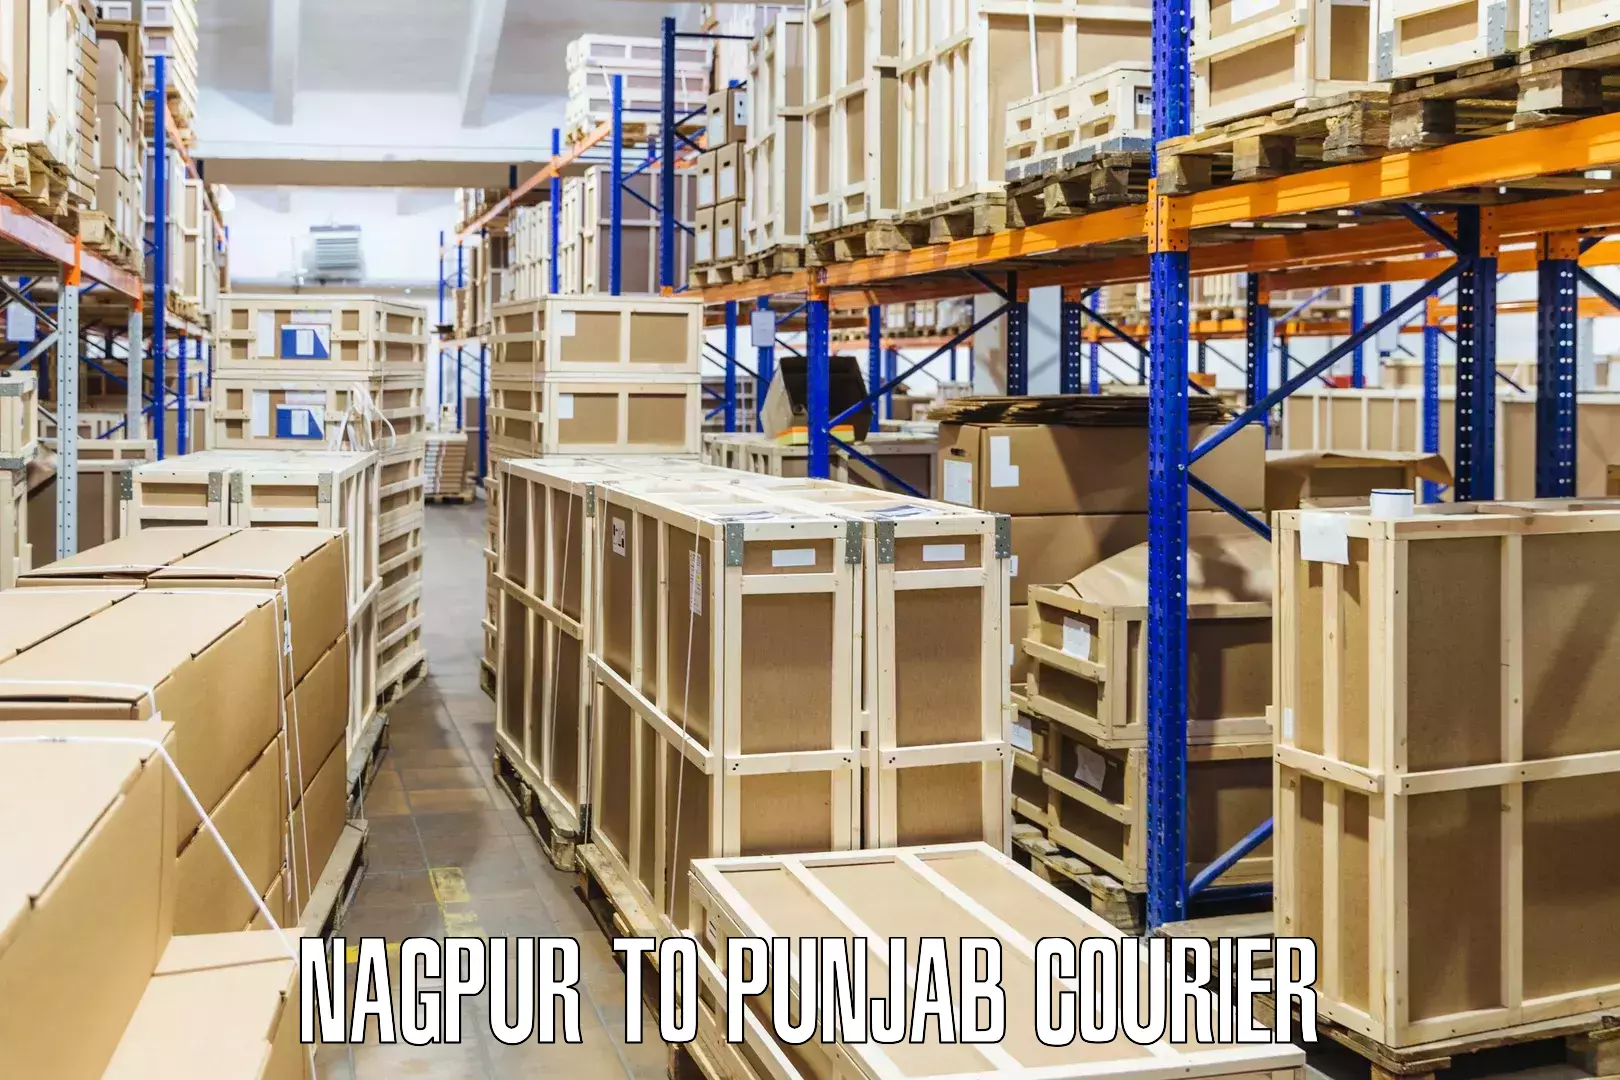 Courier service comparison Nagpur to Rupnagar